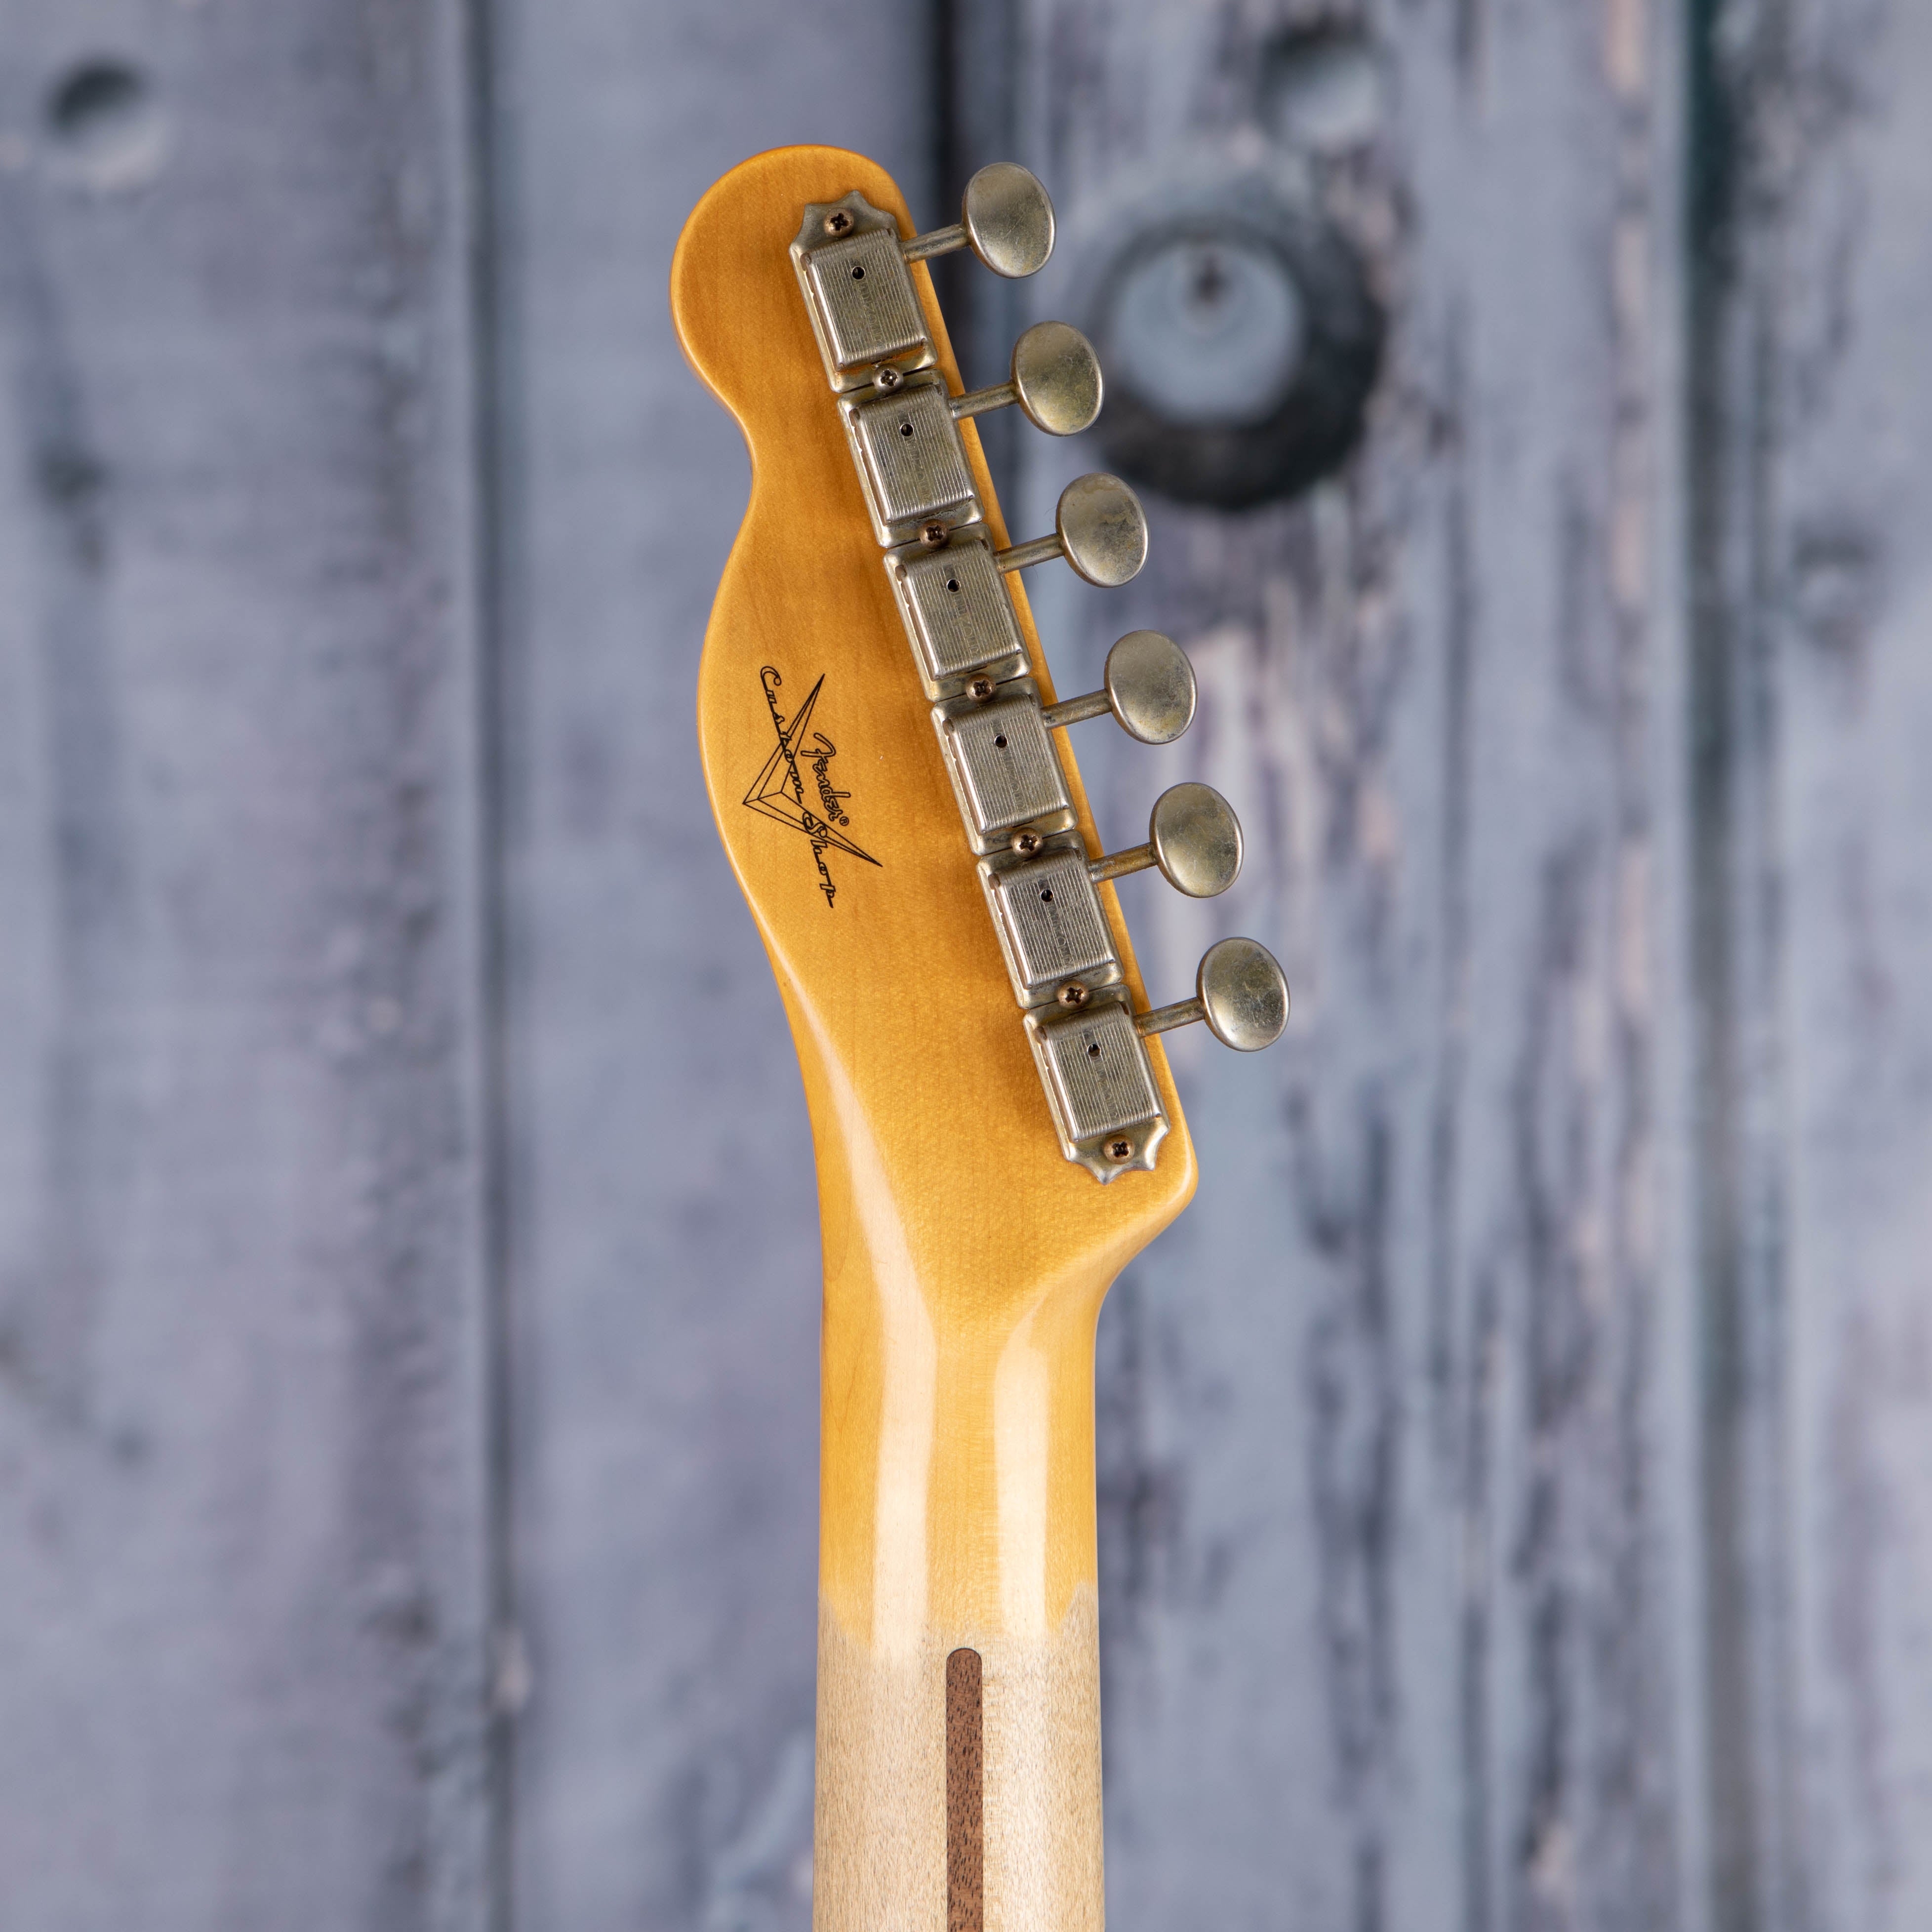 Fender Custom Shop '57 Telecaster Journeyman Relic Electric Guitar, Aged Candy Tangerine, back headstock